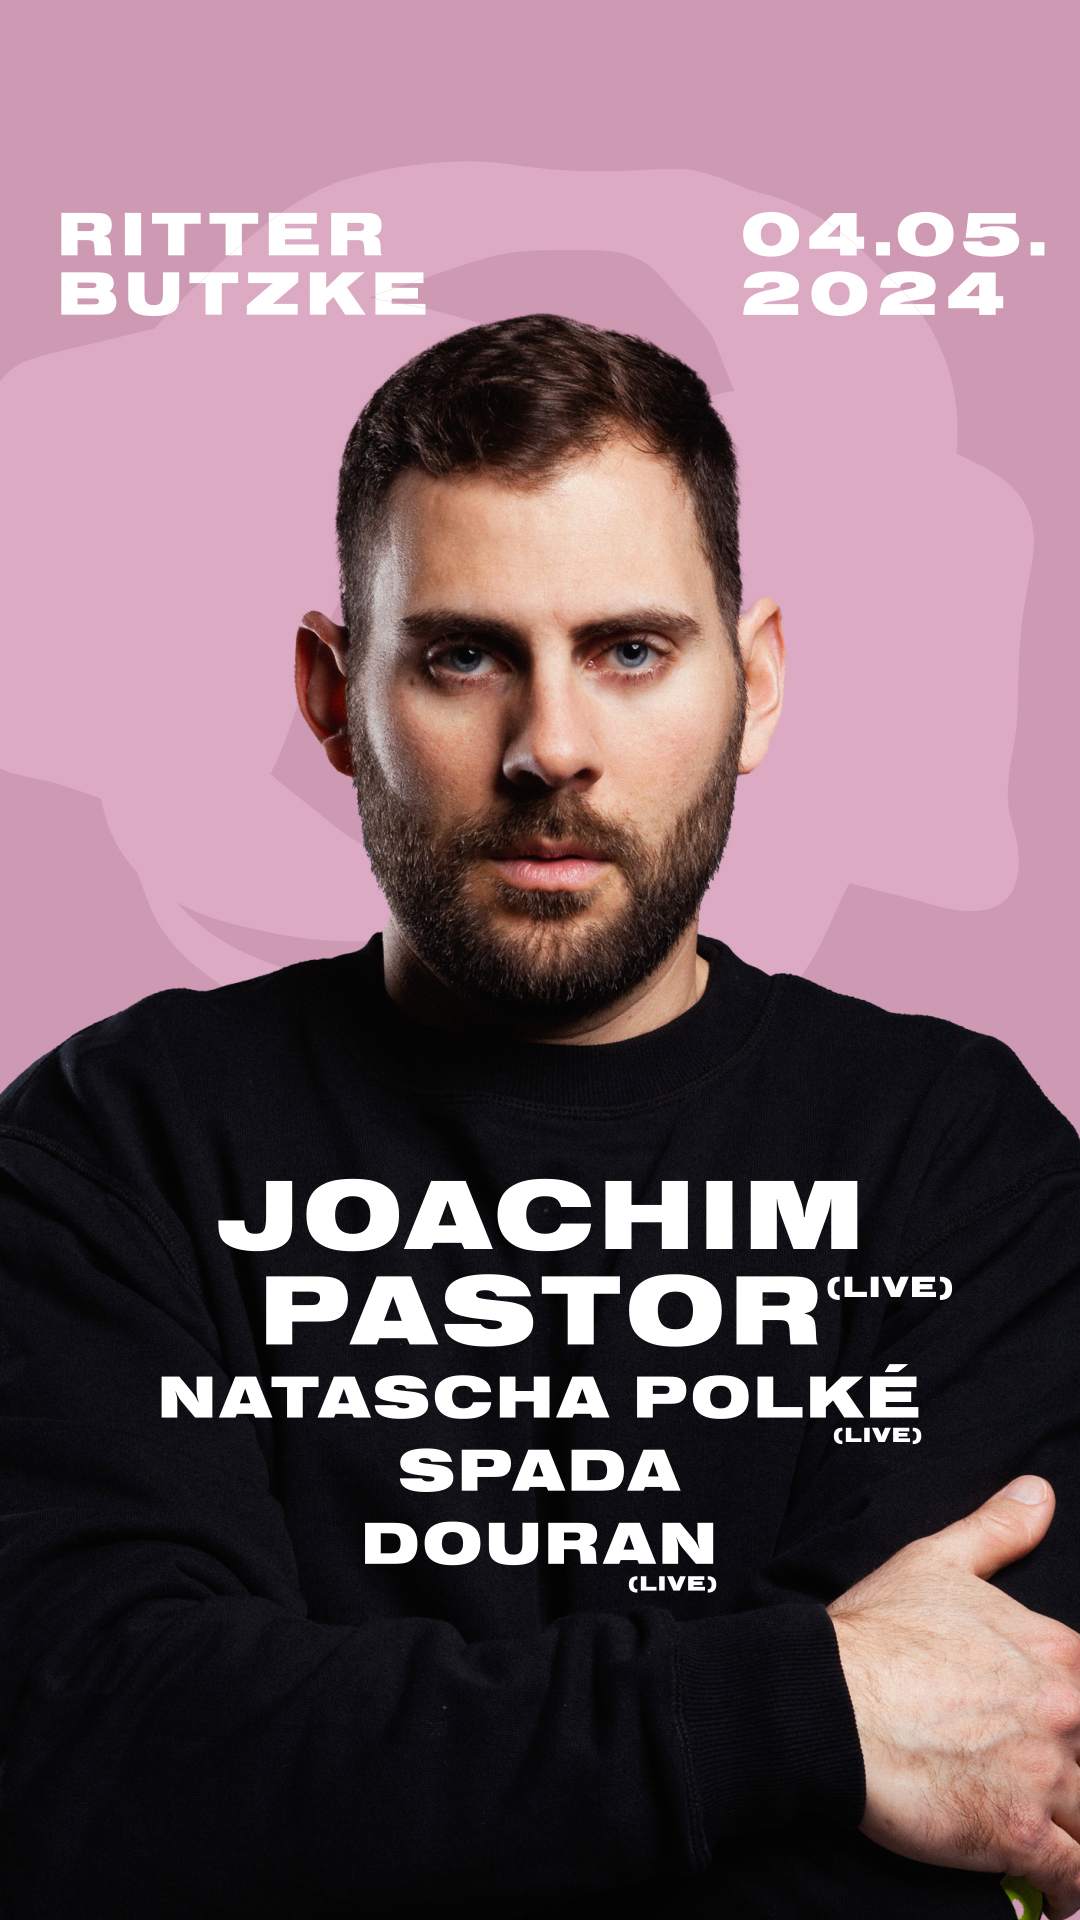 Joachim Pastor - フライヤー裏